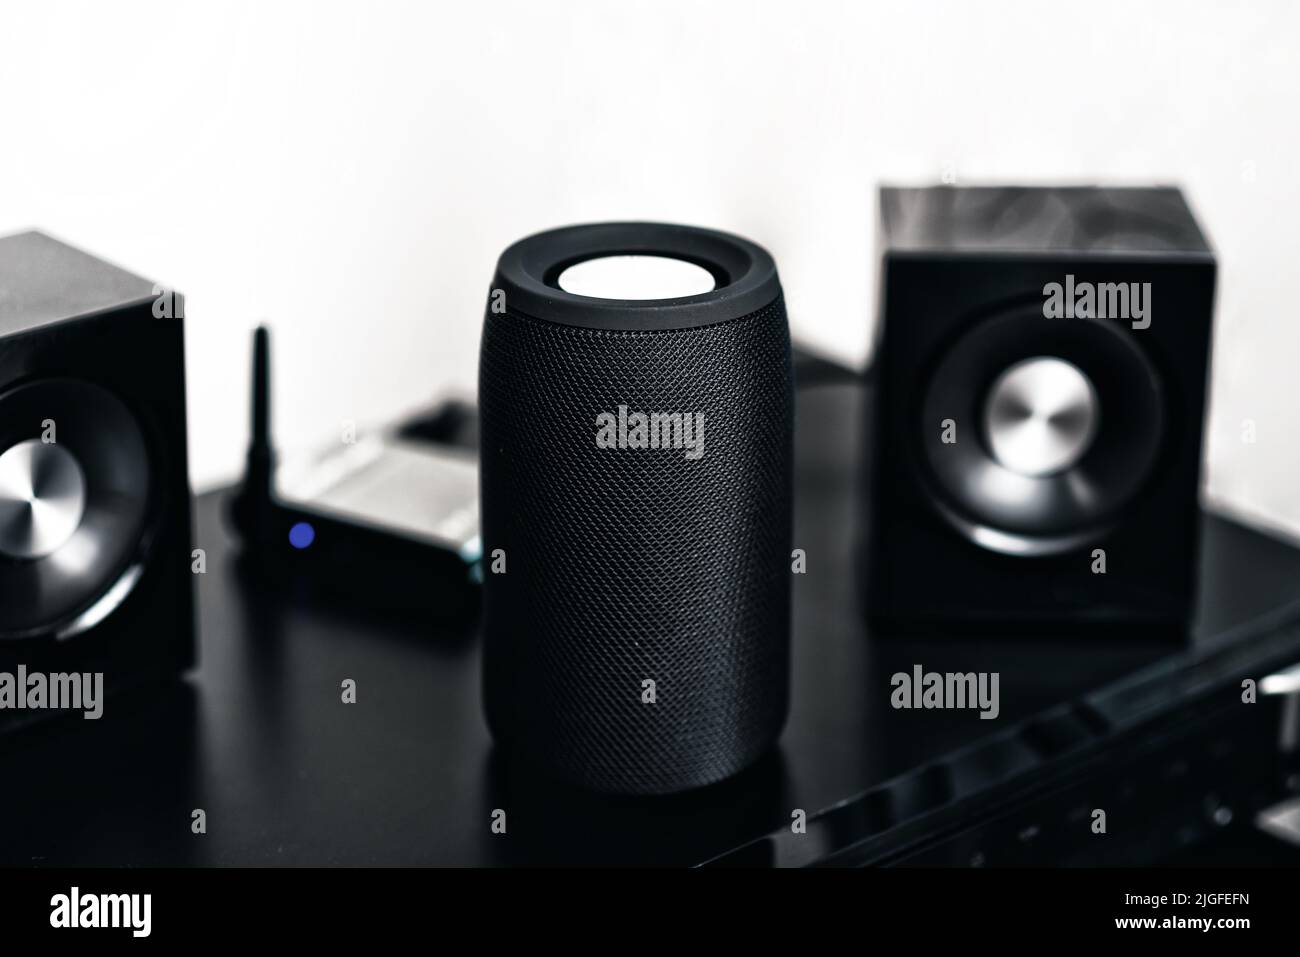 Black mini wireless portable bluetooth speaker for music listening. Stock Photo